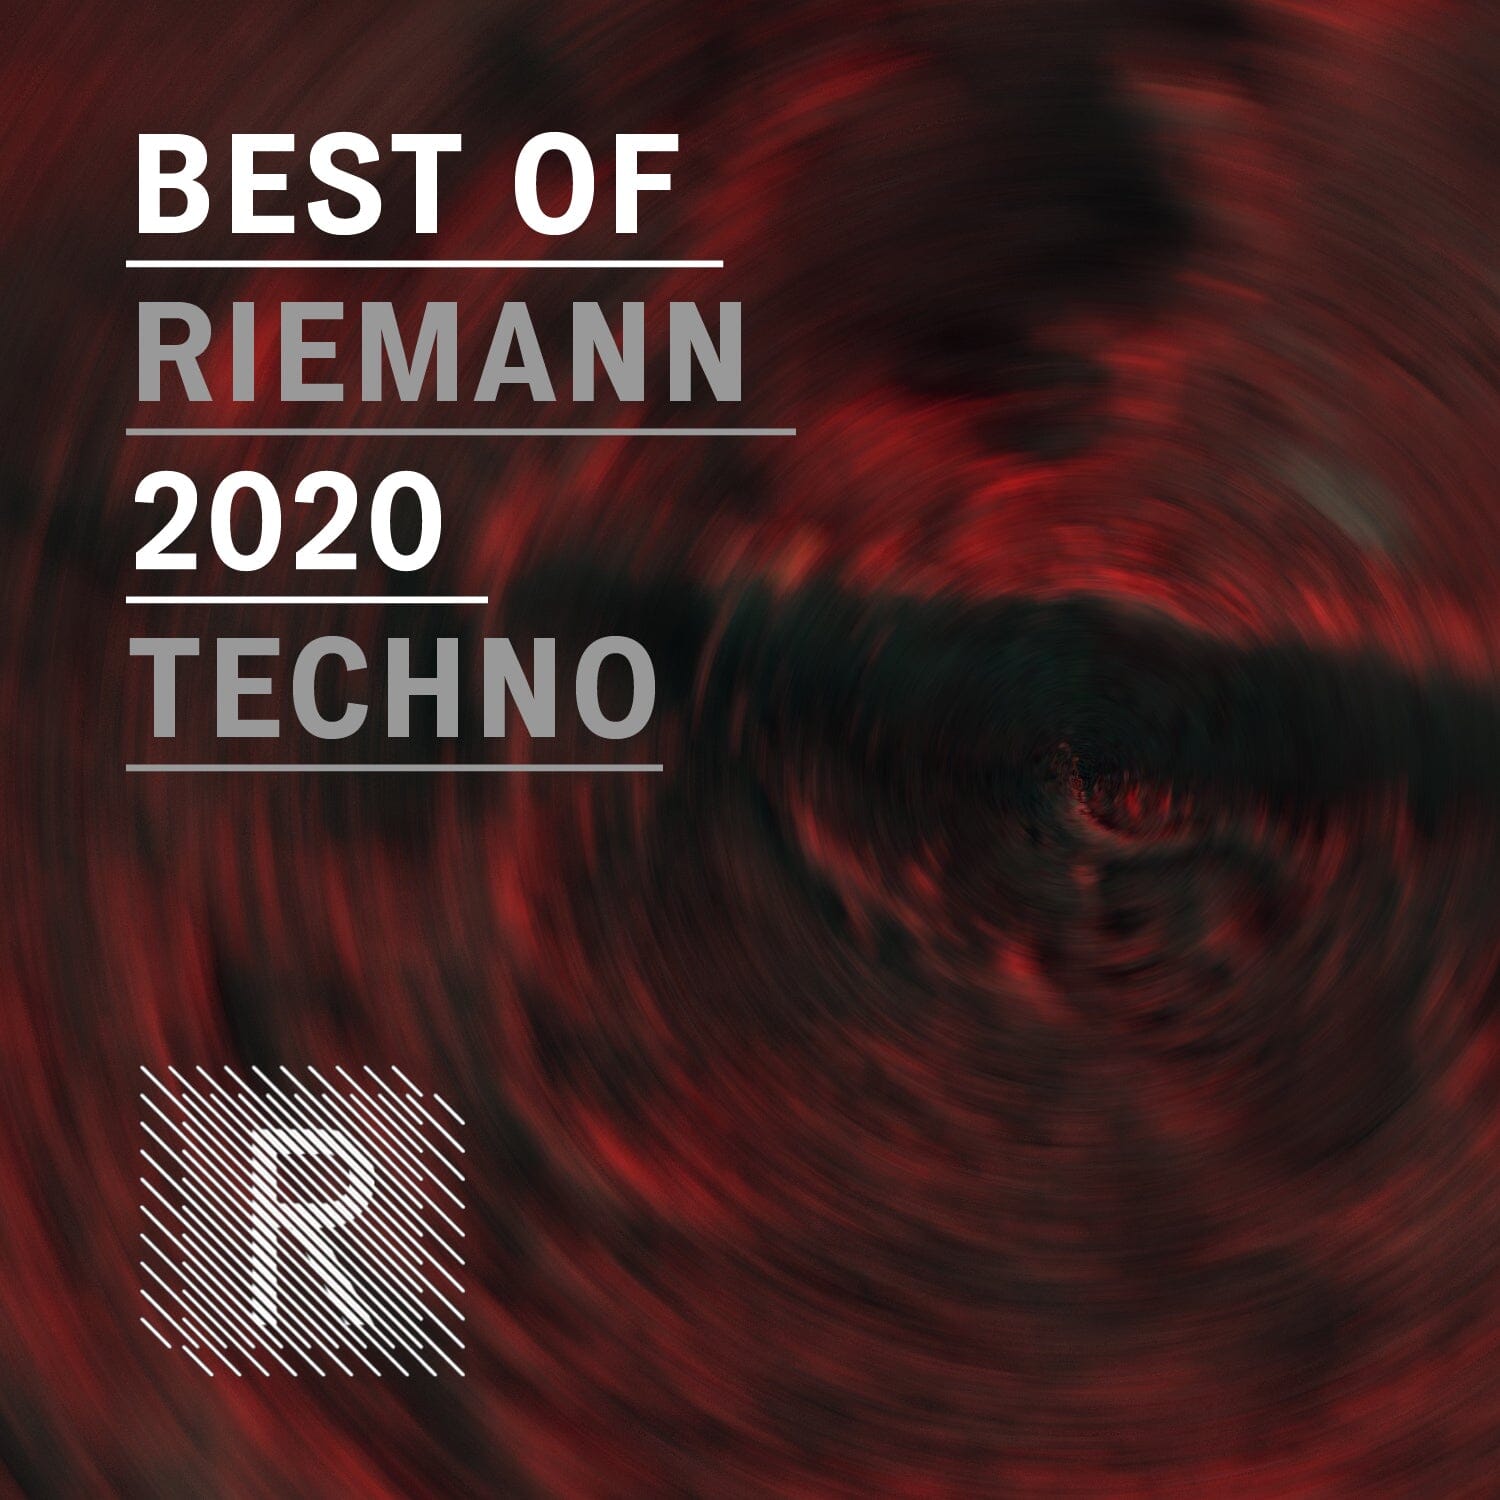 Best of Riemann 2020 Techno - Hard Techno Dark Techno Industrial (Oneshots - Loops) Sample Pack Riemann Kollektion